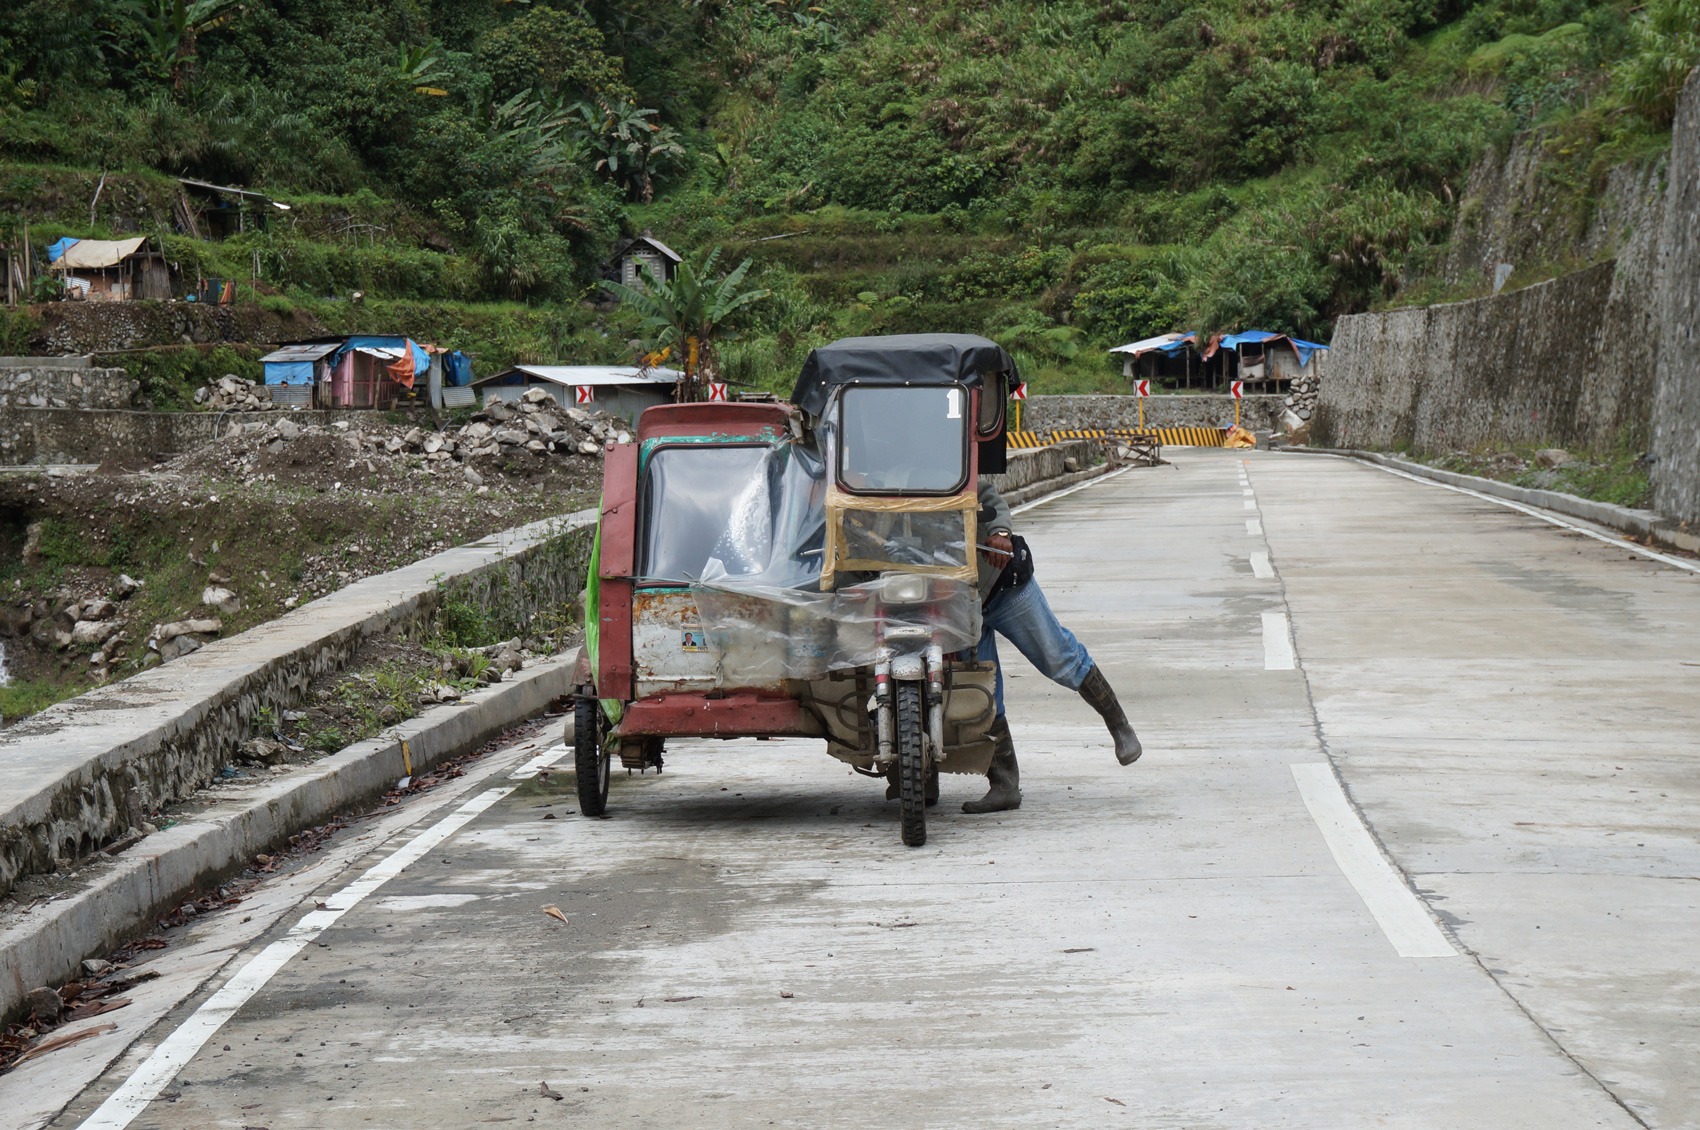 Trycicle pour rejoindre jonction Batad - Philippines